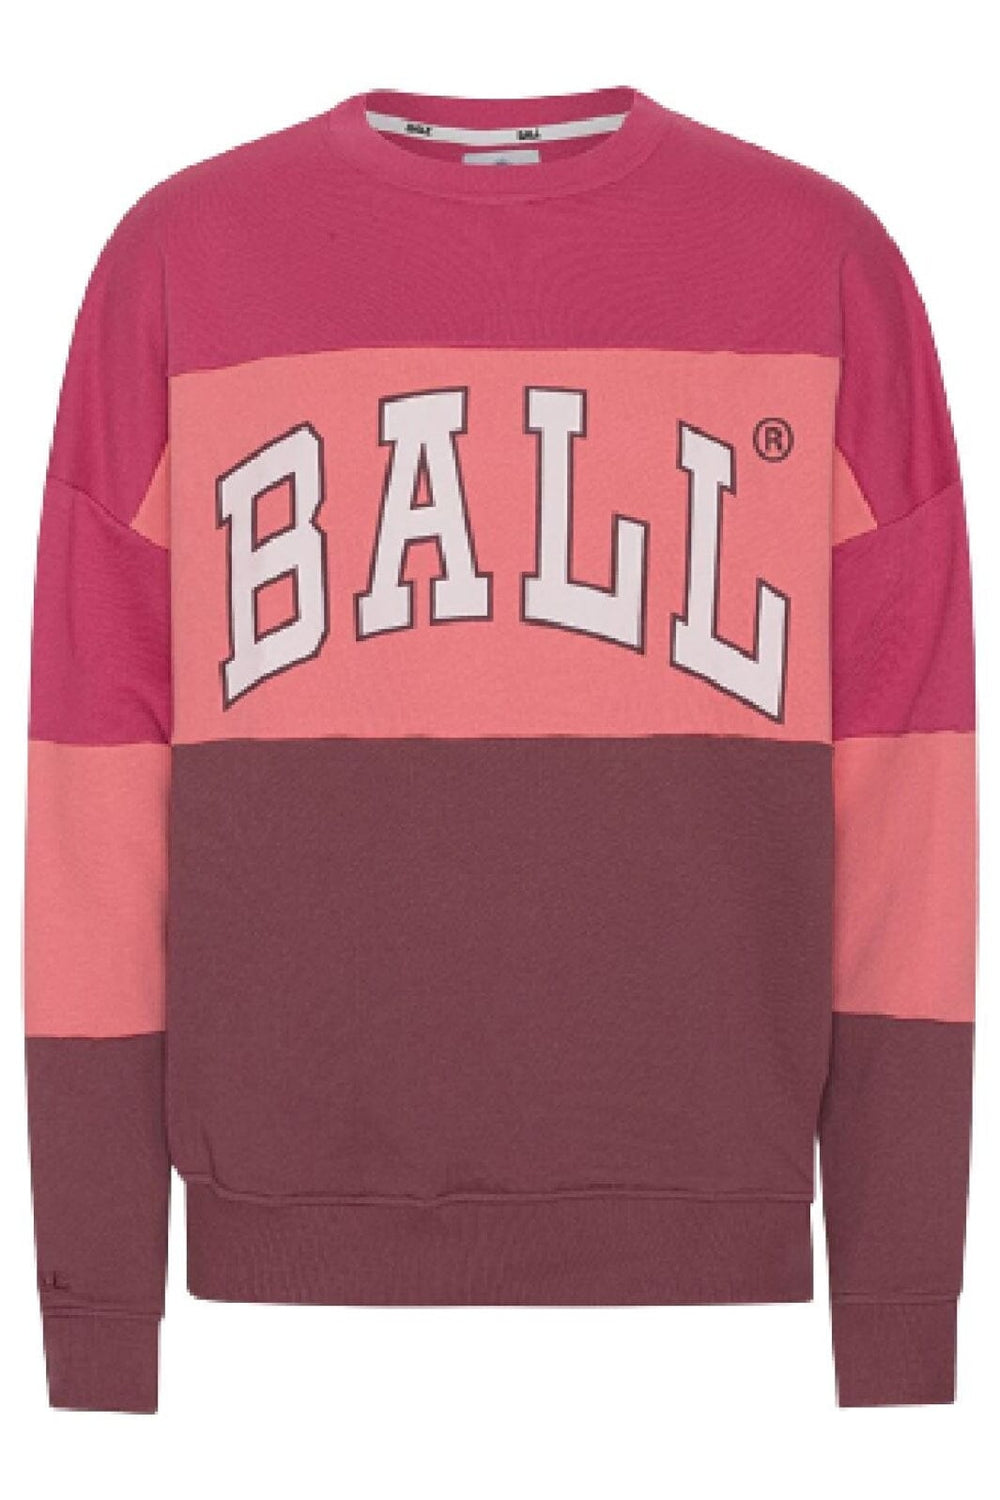 Ball - J. Robinson Multi - Dp/Roseh/Burg Sweatshirts 